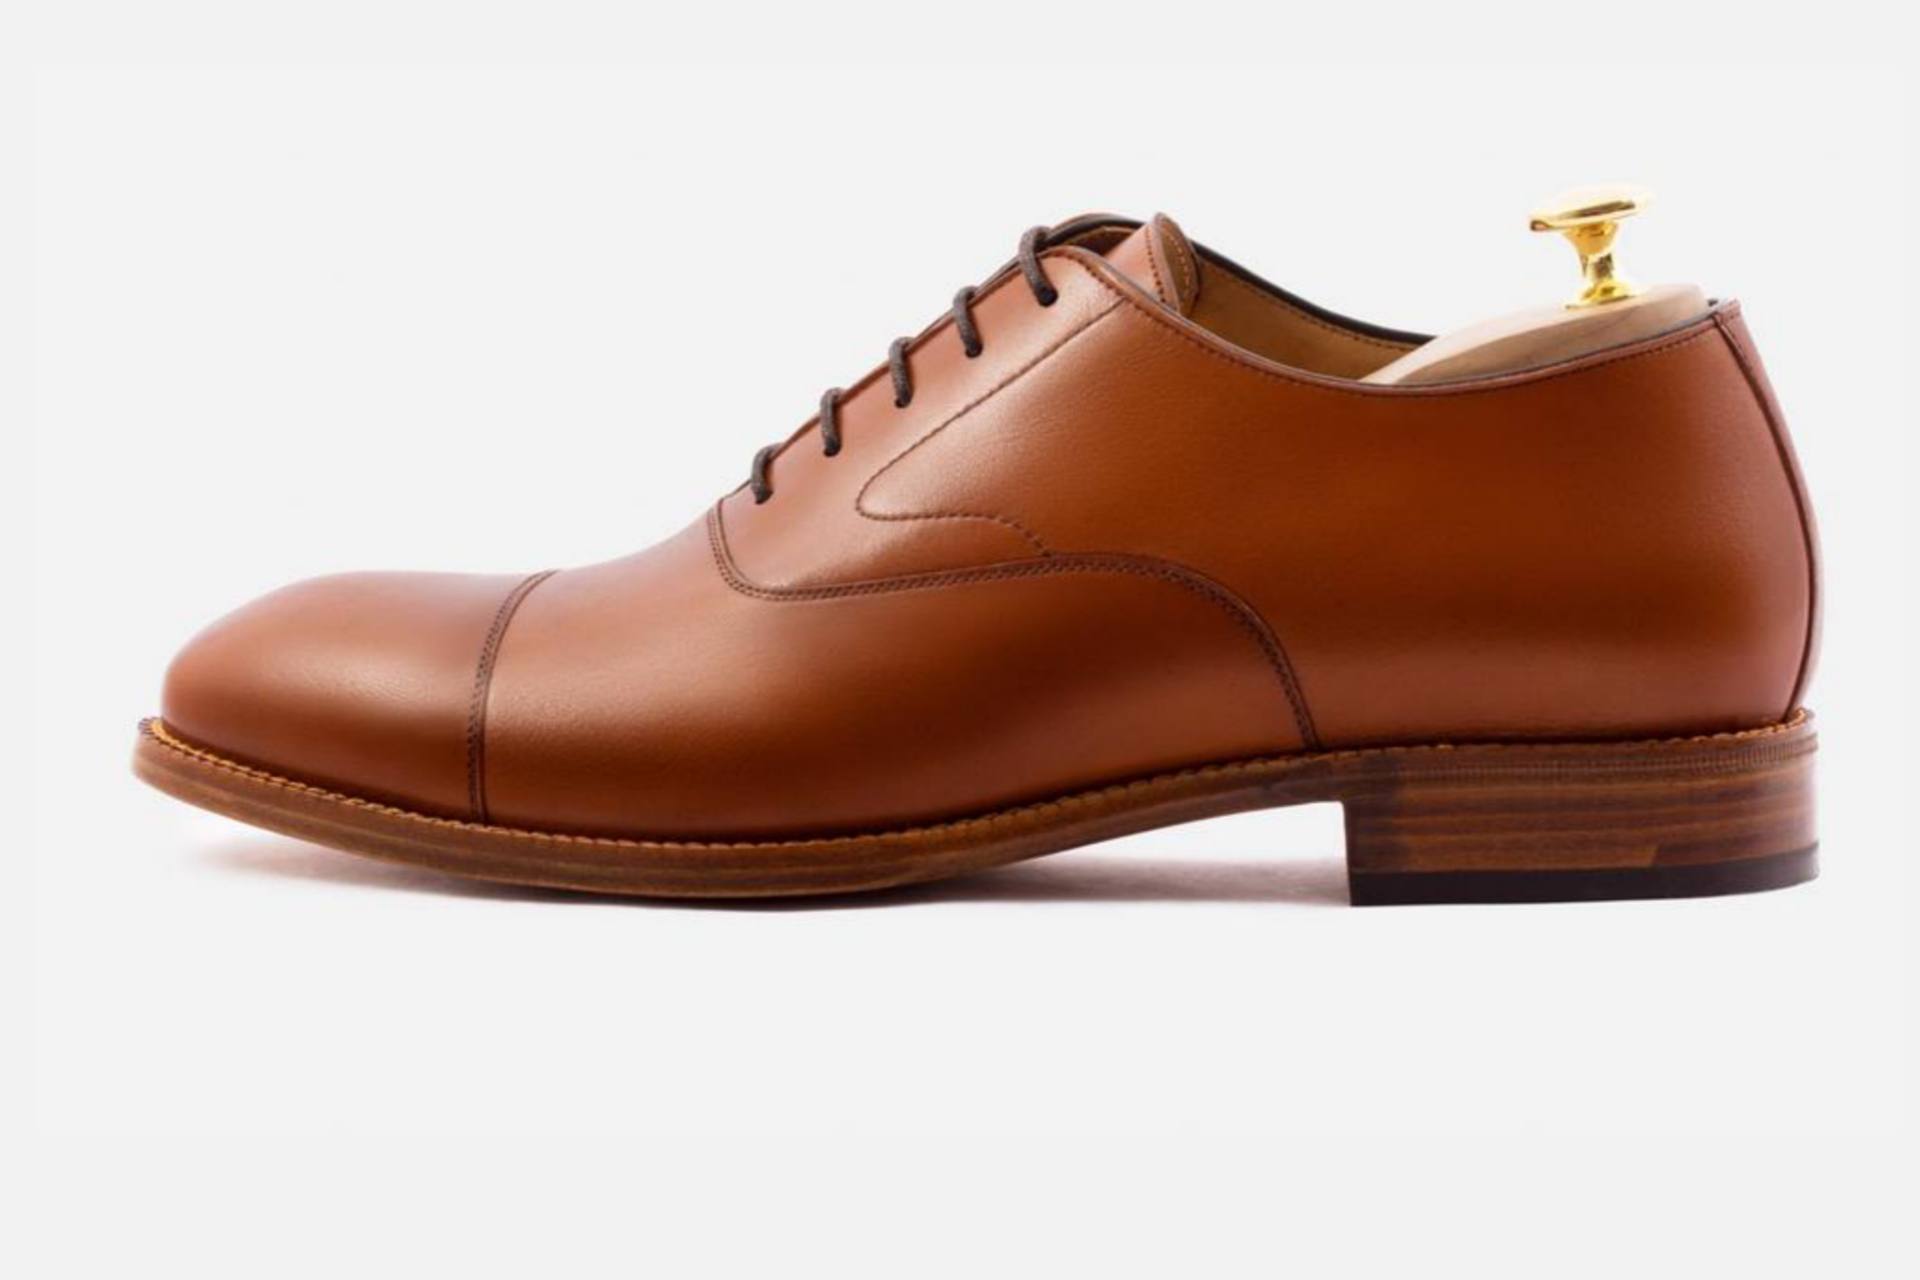 Best men's work oxford shoes